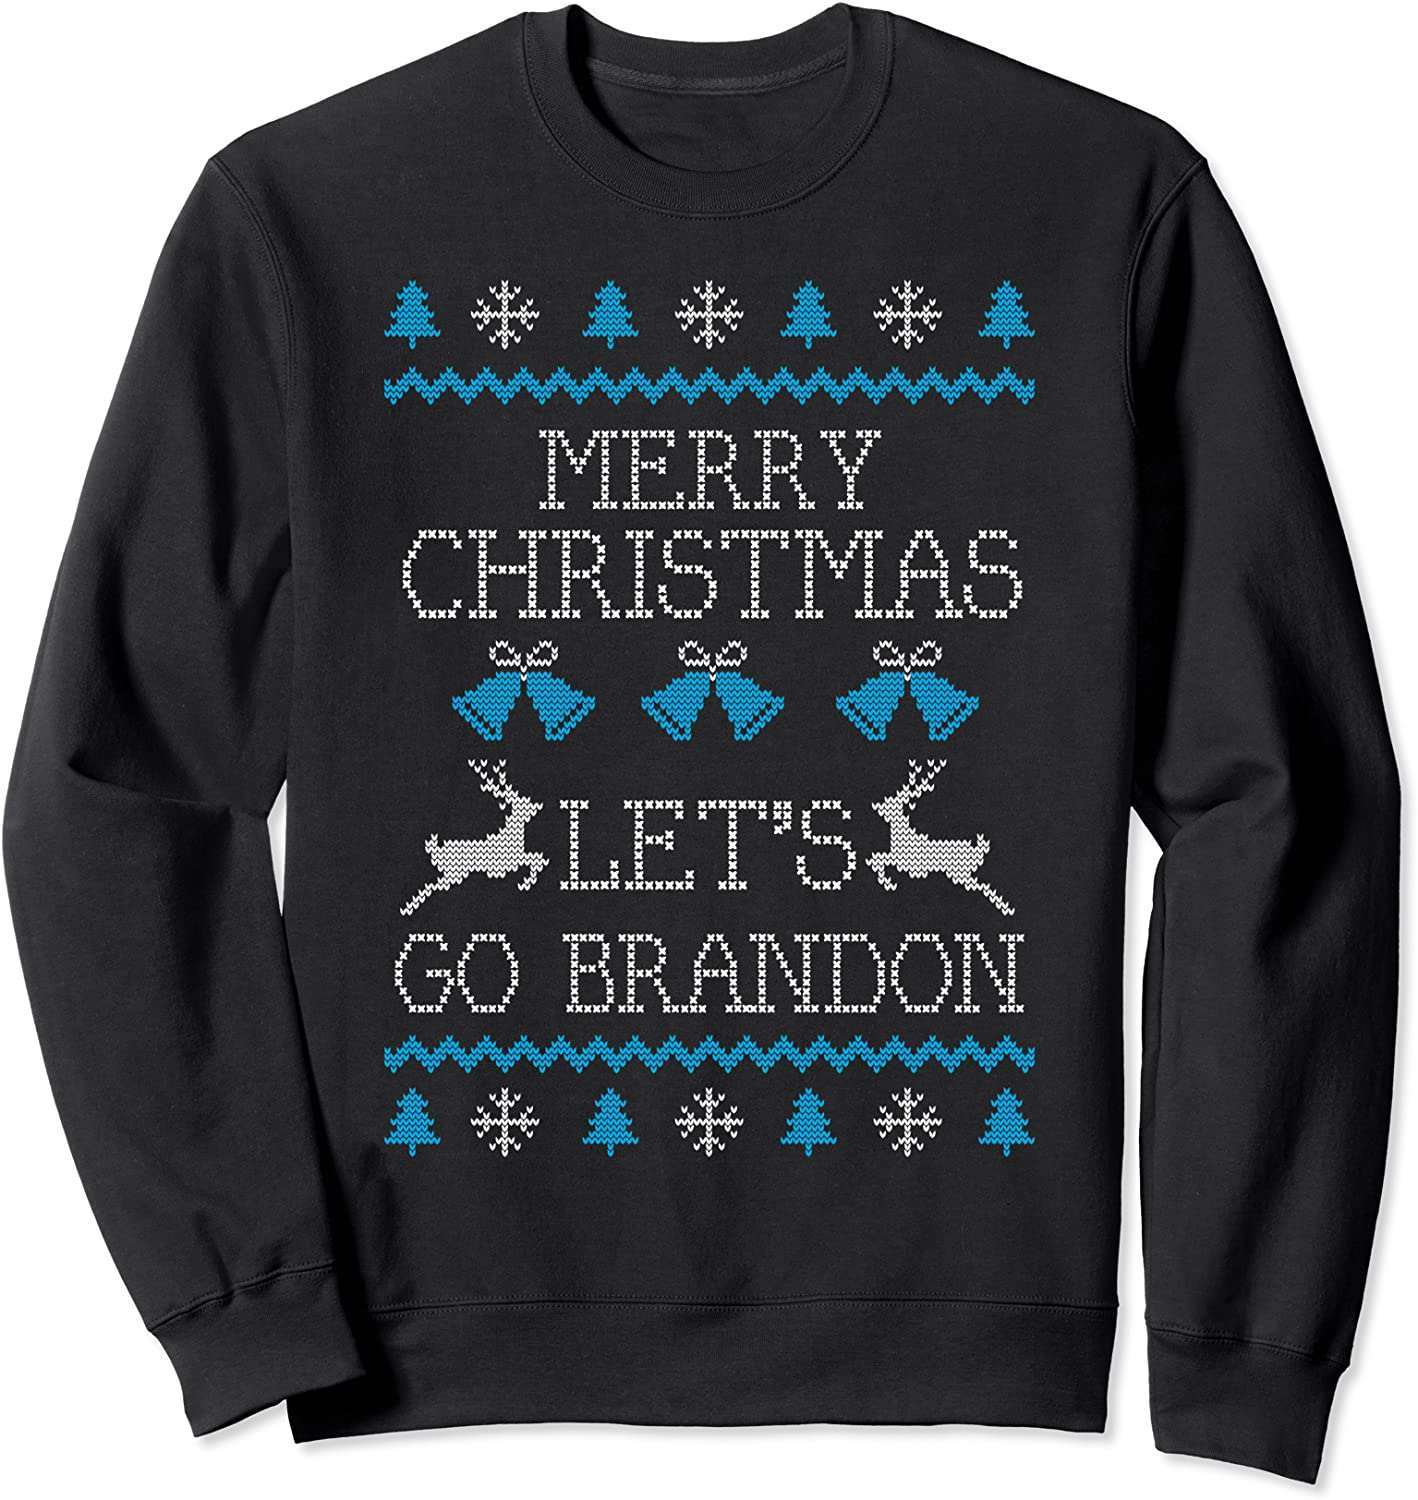 Let's Go Brandon FJB Ugly Christmas Sweater Sweatshirt - Trends